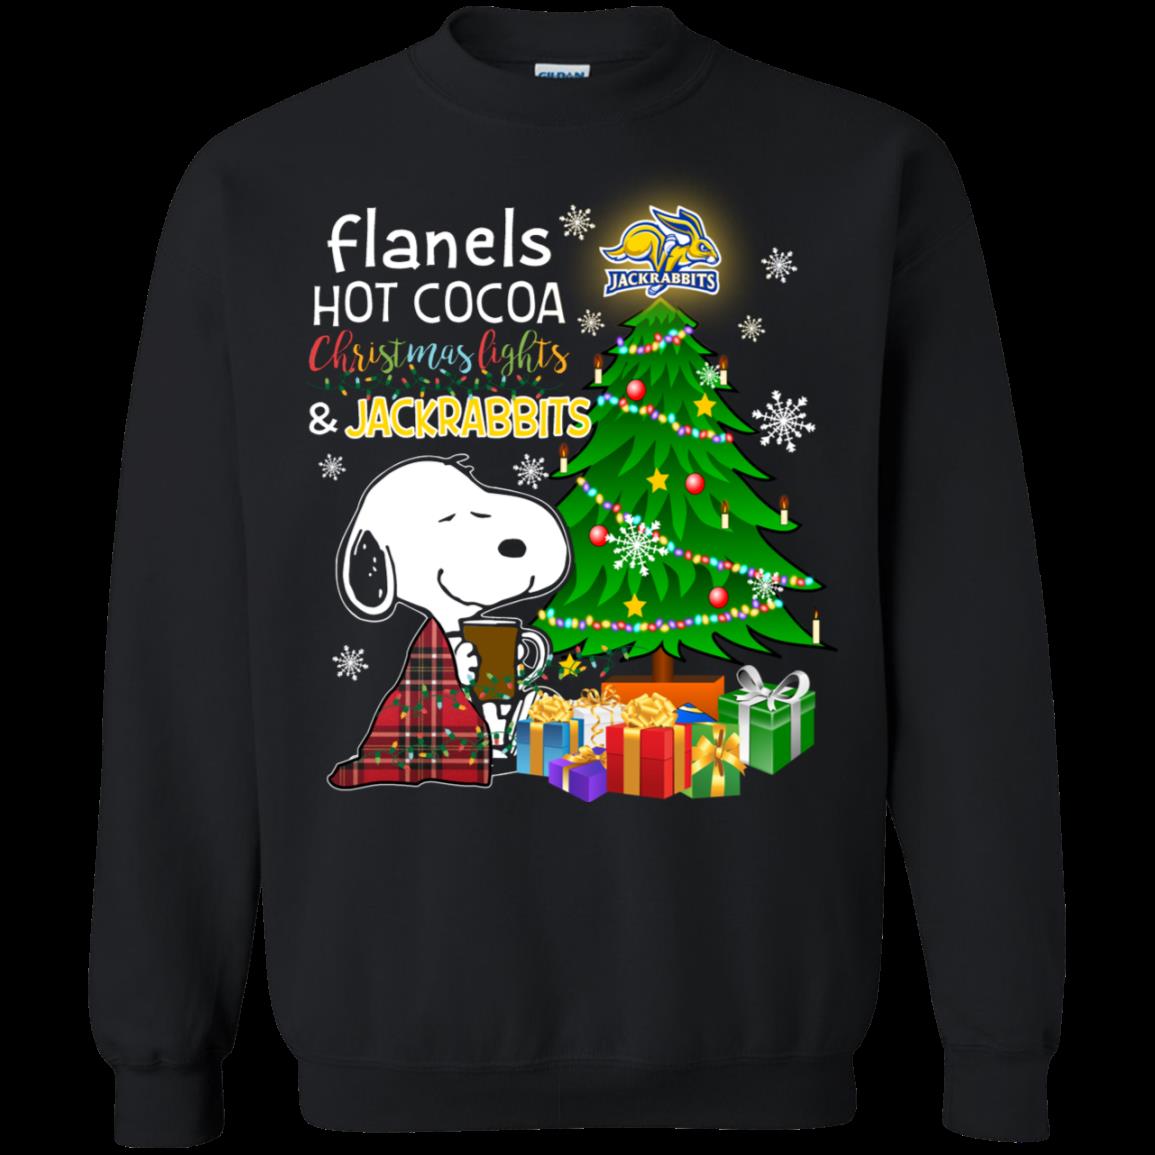 South Dakota State Jackrabbits Snoopy Ugly Christmas Sweater Flanels Hot Cocoa T Shirt Hoodies Sweatshirt